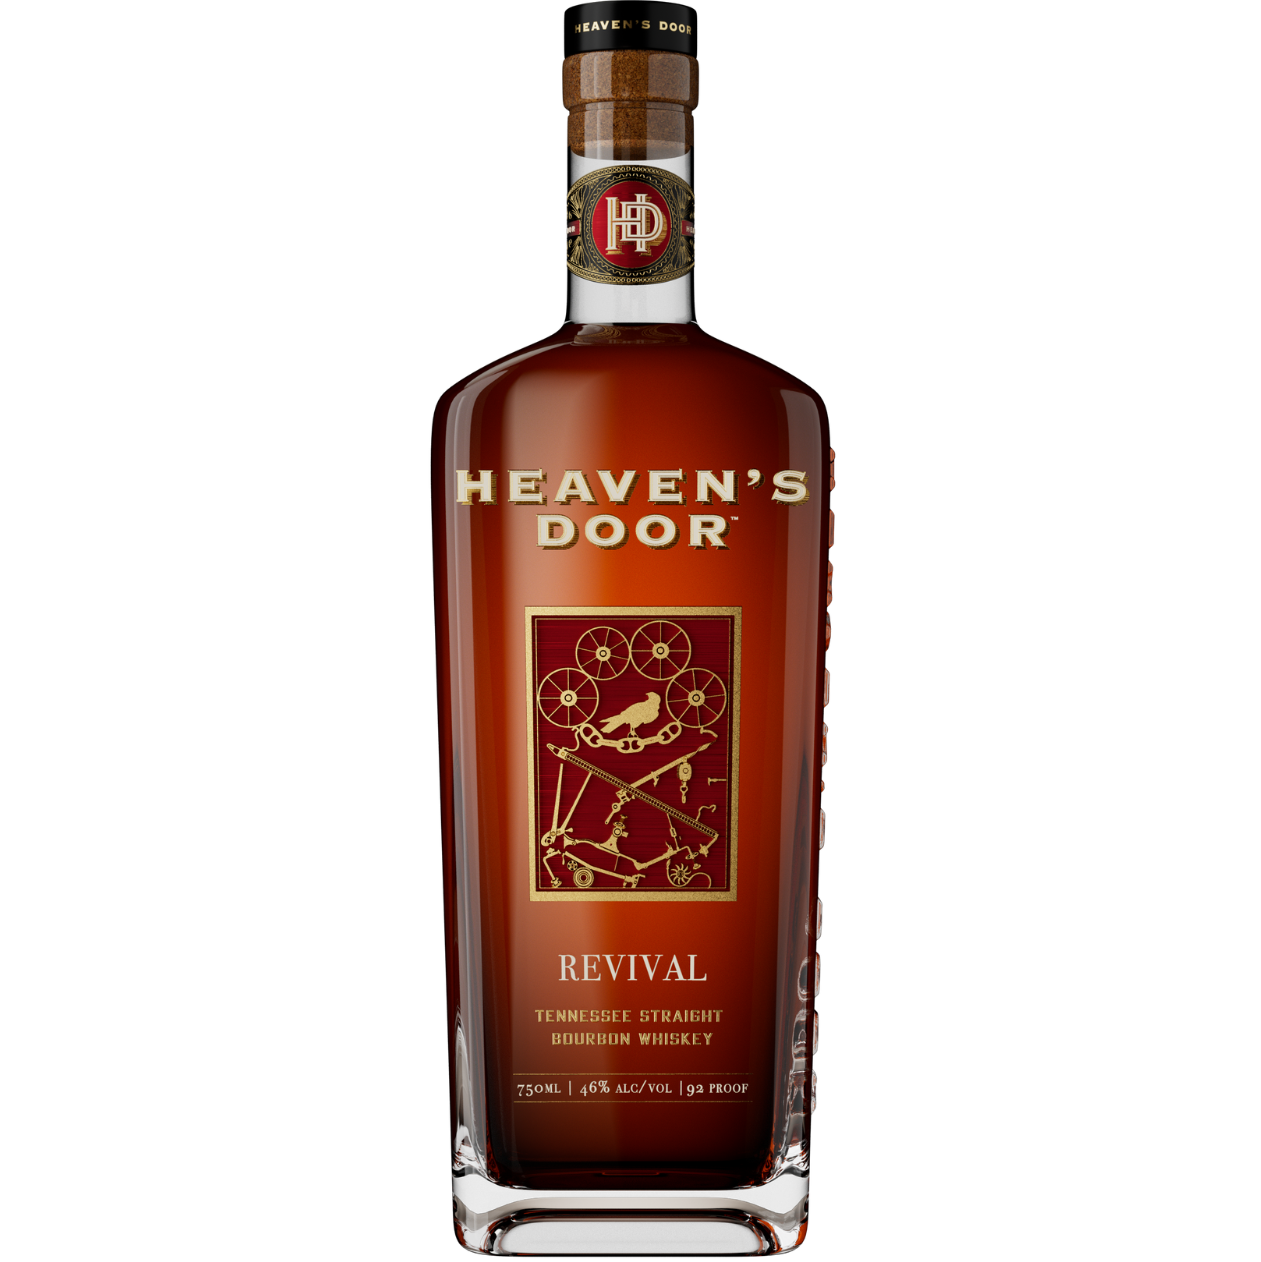 Heaven's Door 'Revival' Straight Bourbon Whiskey, Tennessee